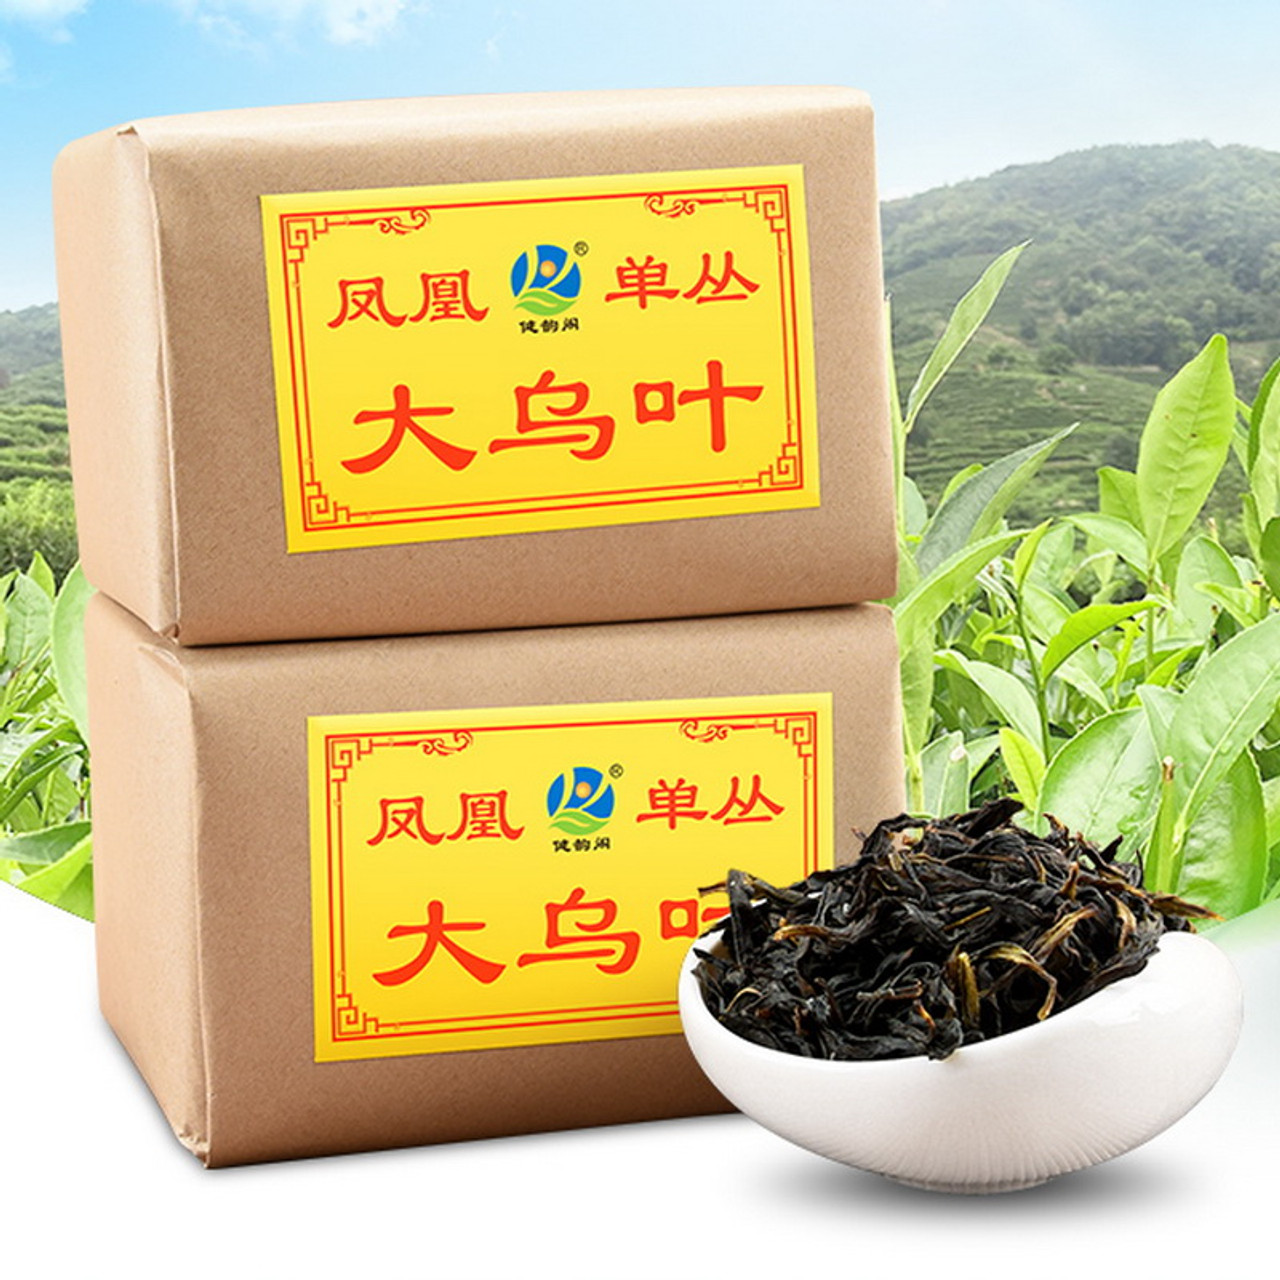 Marigold Green Tea by Tea Trunk - Assorted Tea Collection